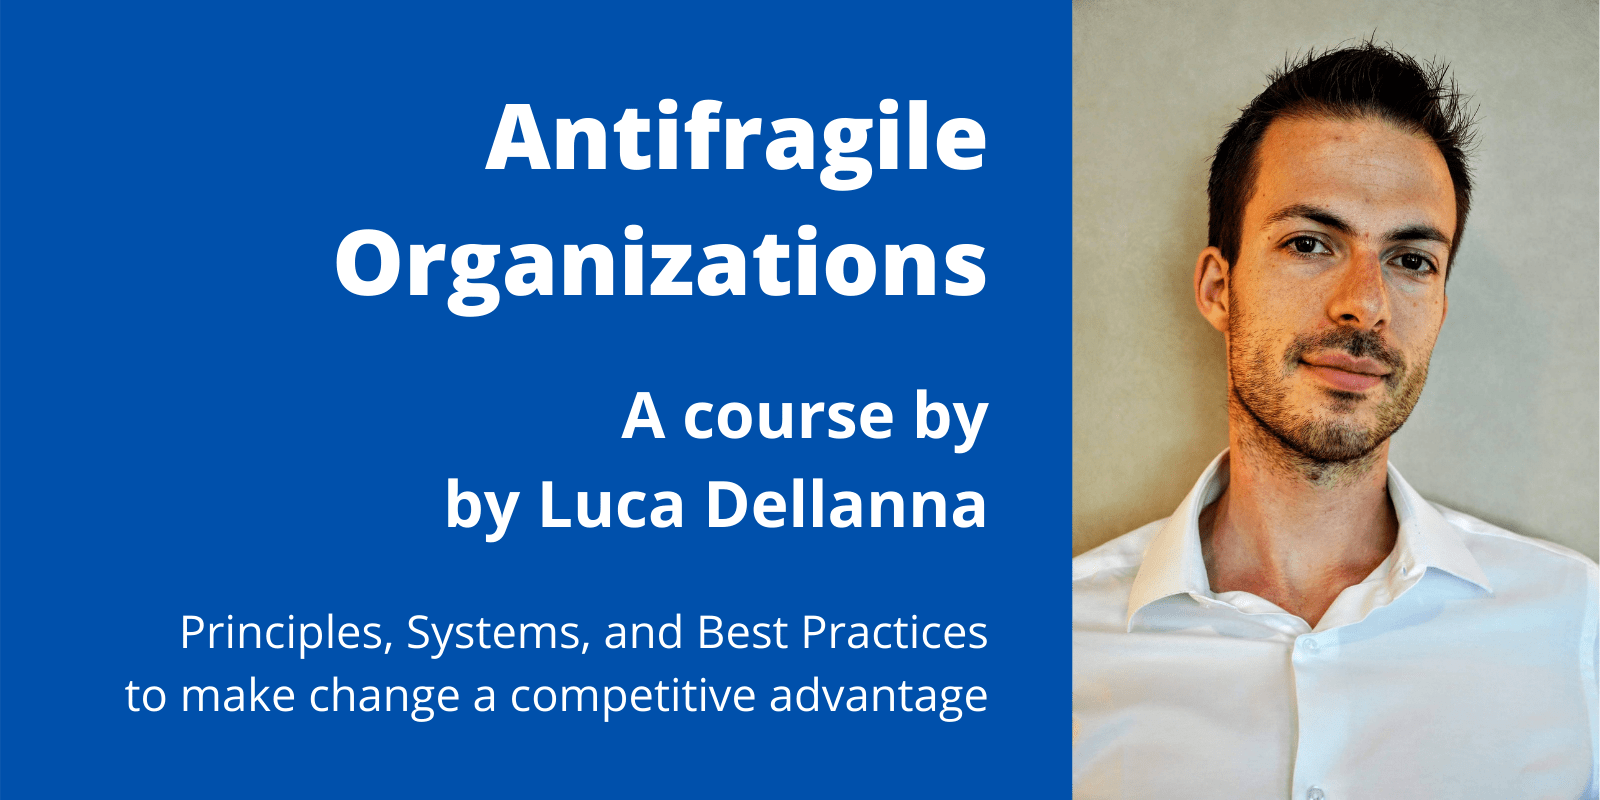 Antifragile Organizations